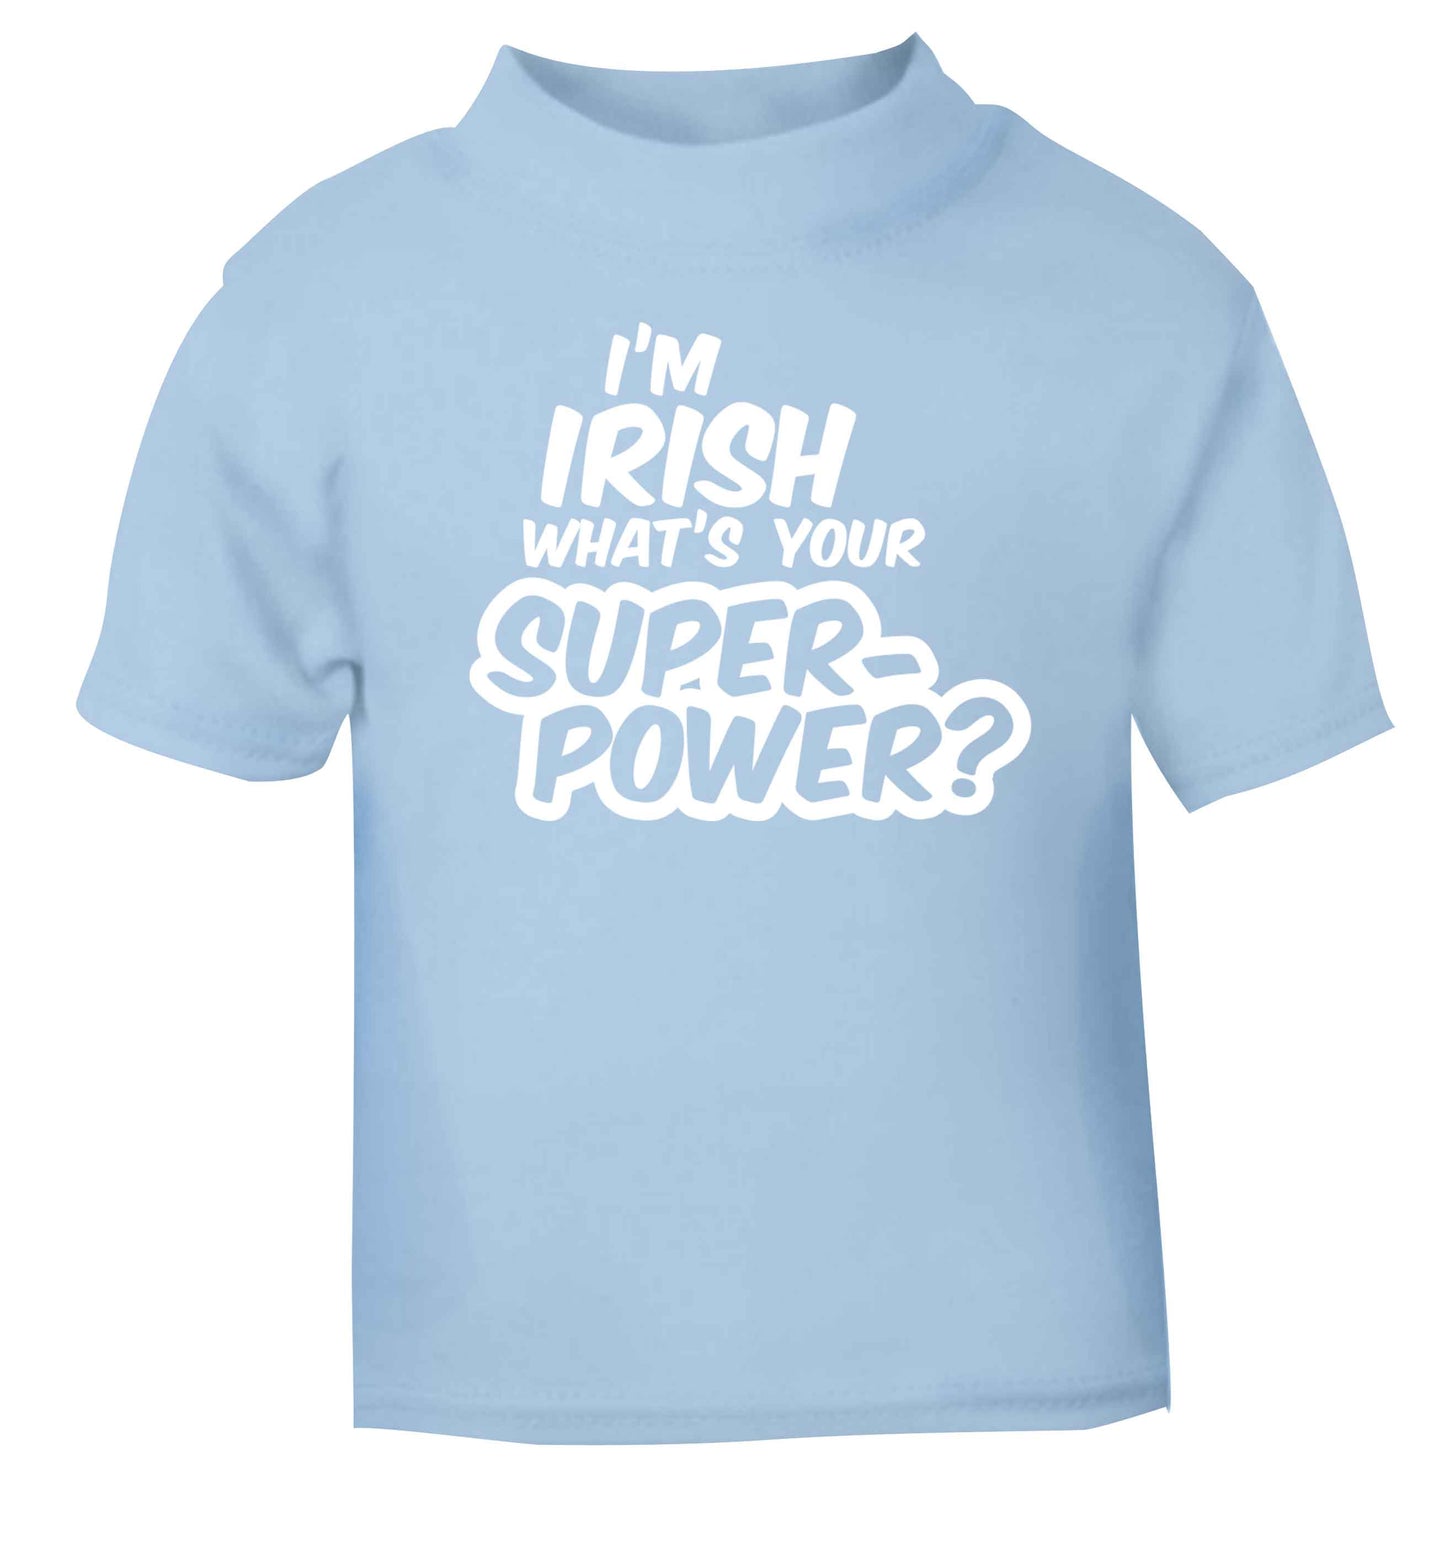 I'm Irish what's your superpower? light blue baby toddler Tshirt 2 Years